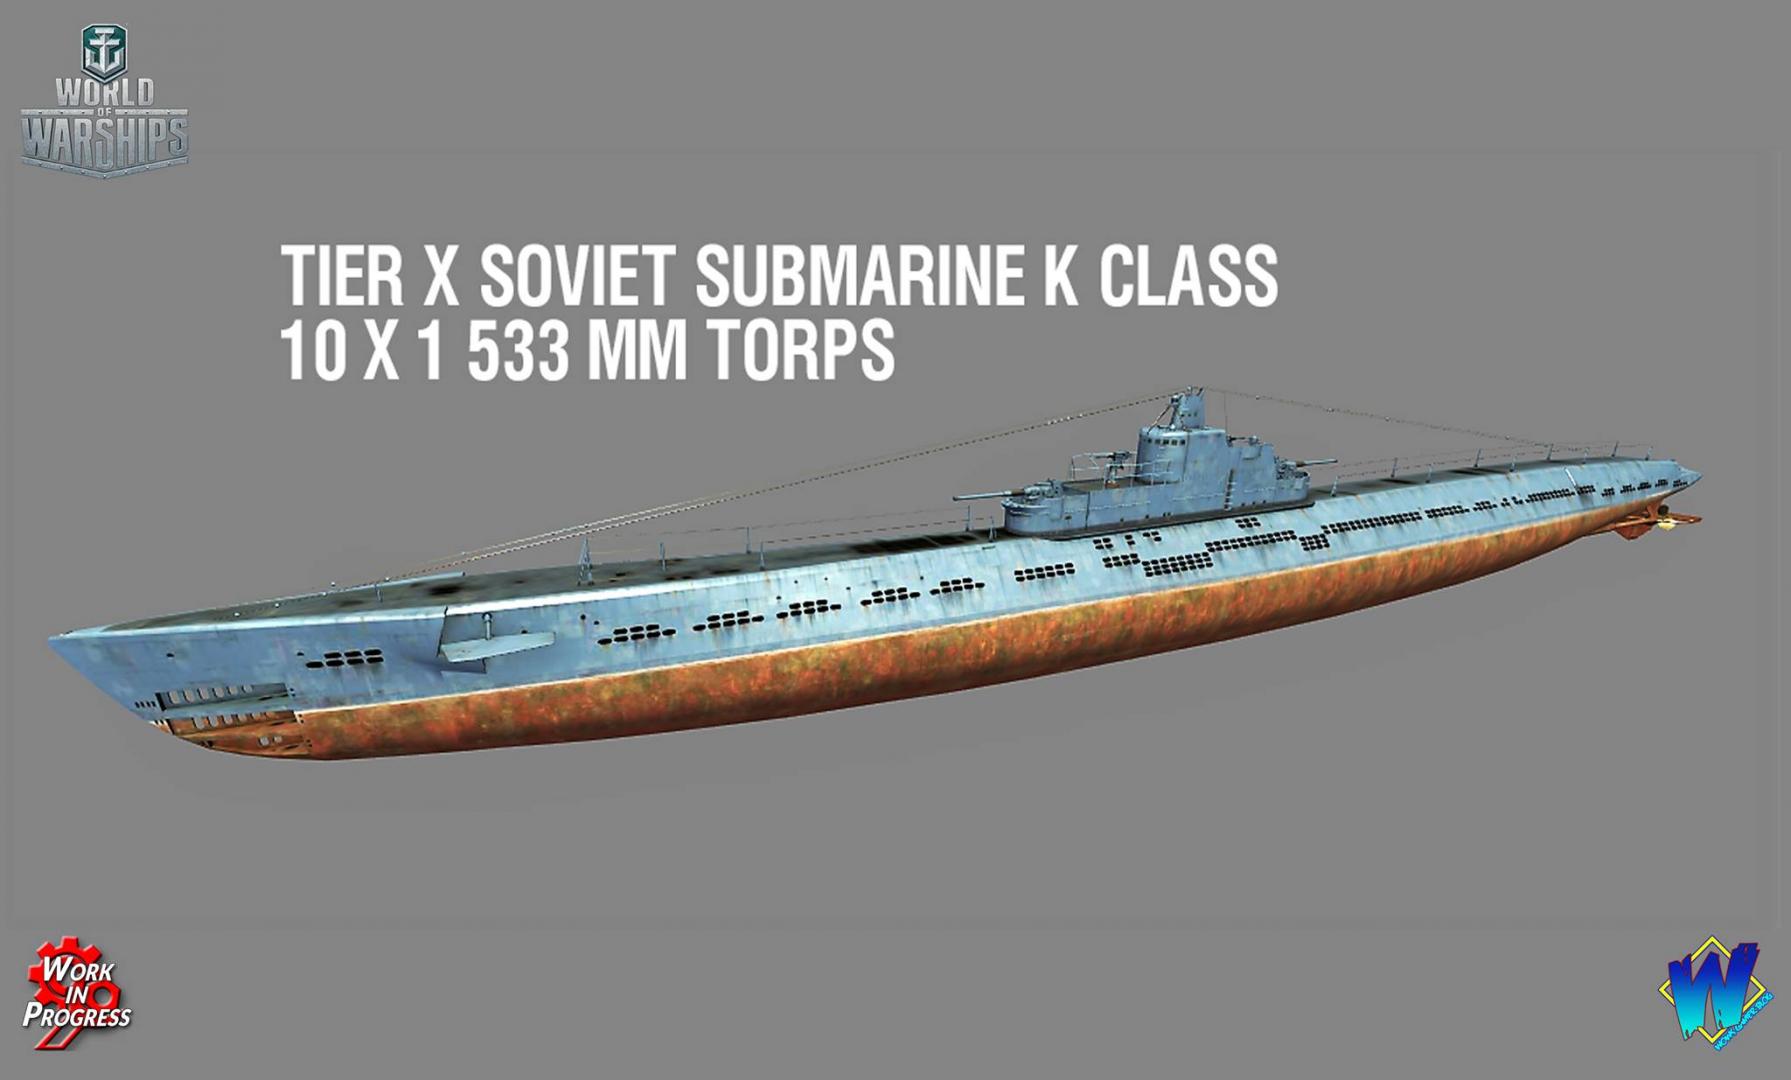 TierX-Sovietsub-Kclass.jpg